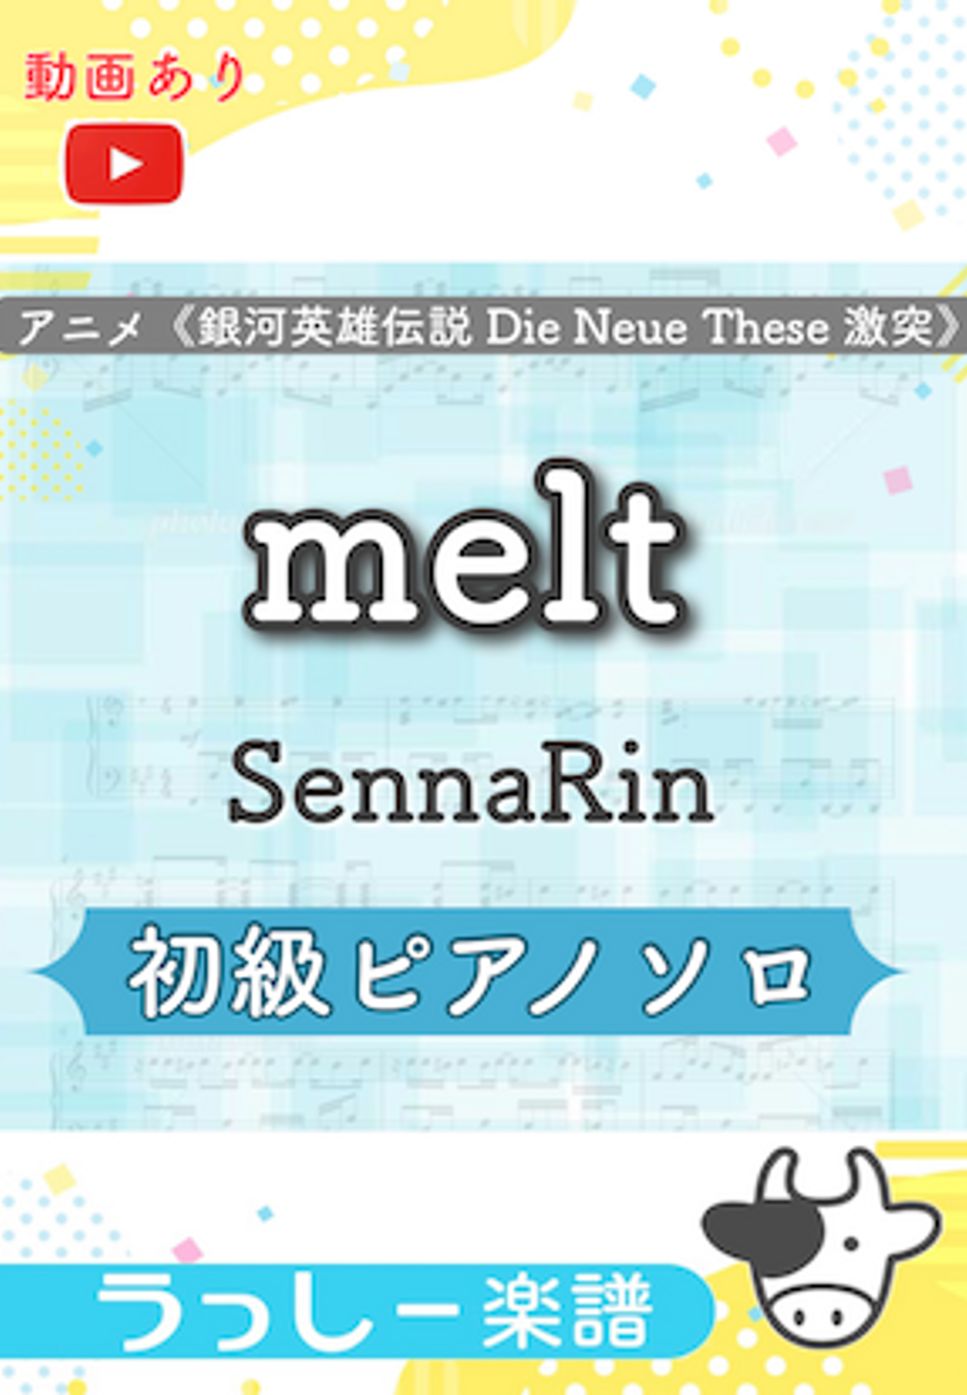 SennaRin - melt (アニメ「銀河英雄伝説　Die Neue These 激突」) by 牛武奏人